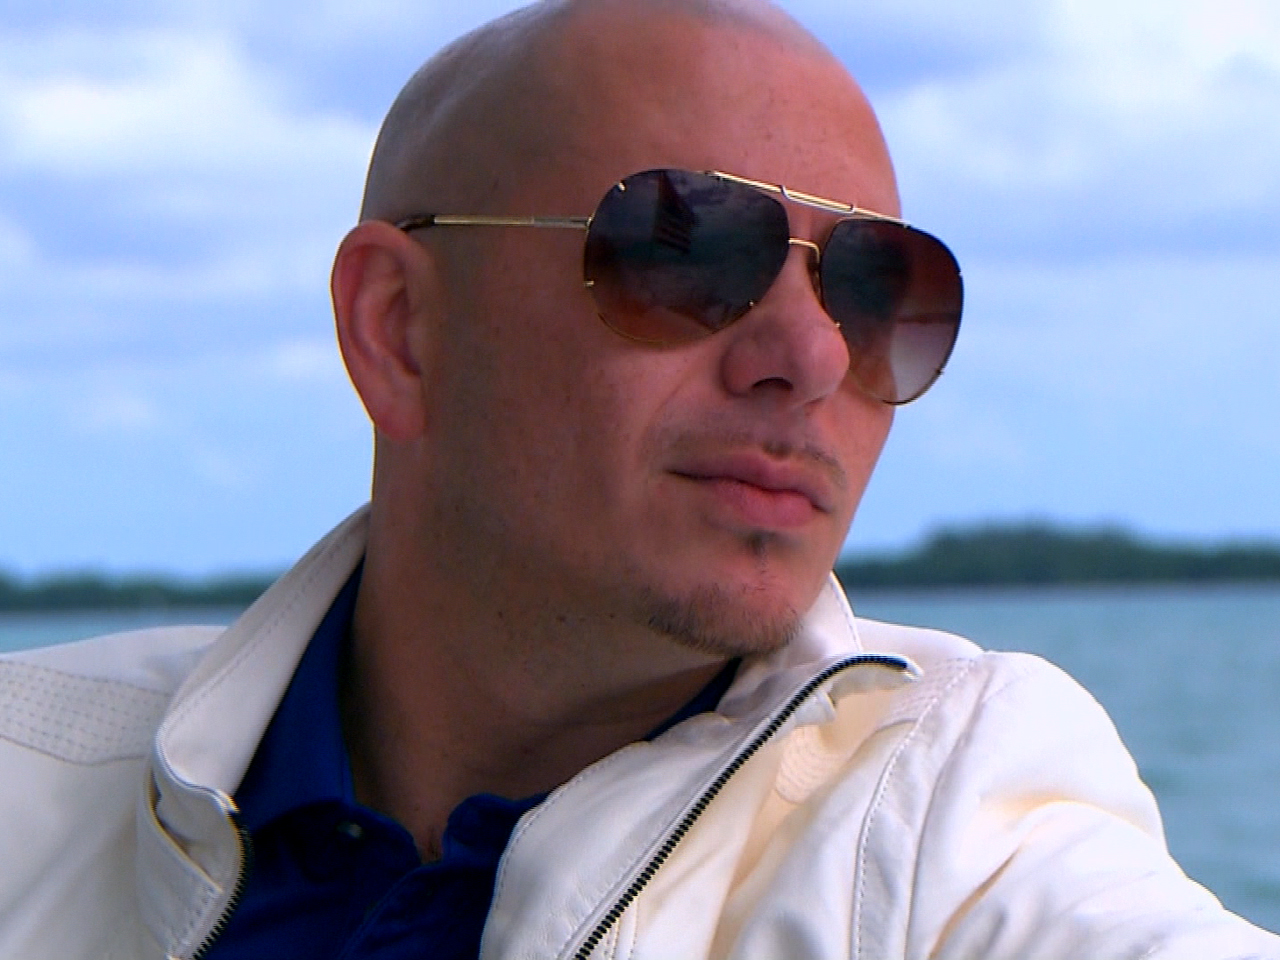 pitbull rapper with sunglasses